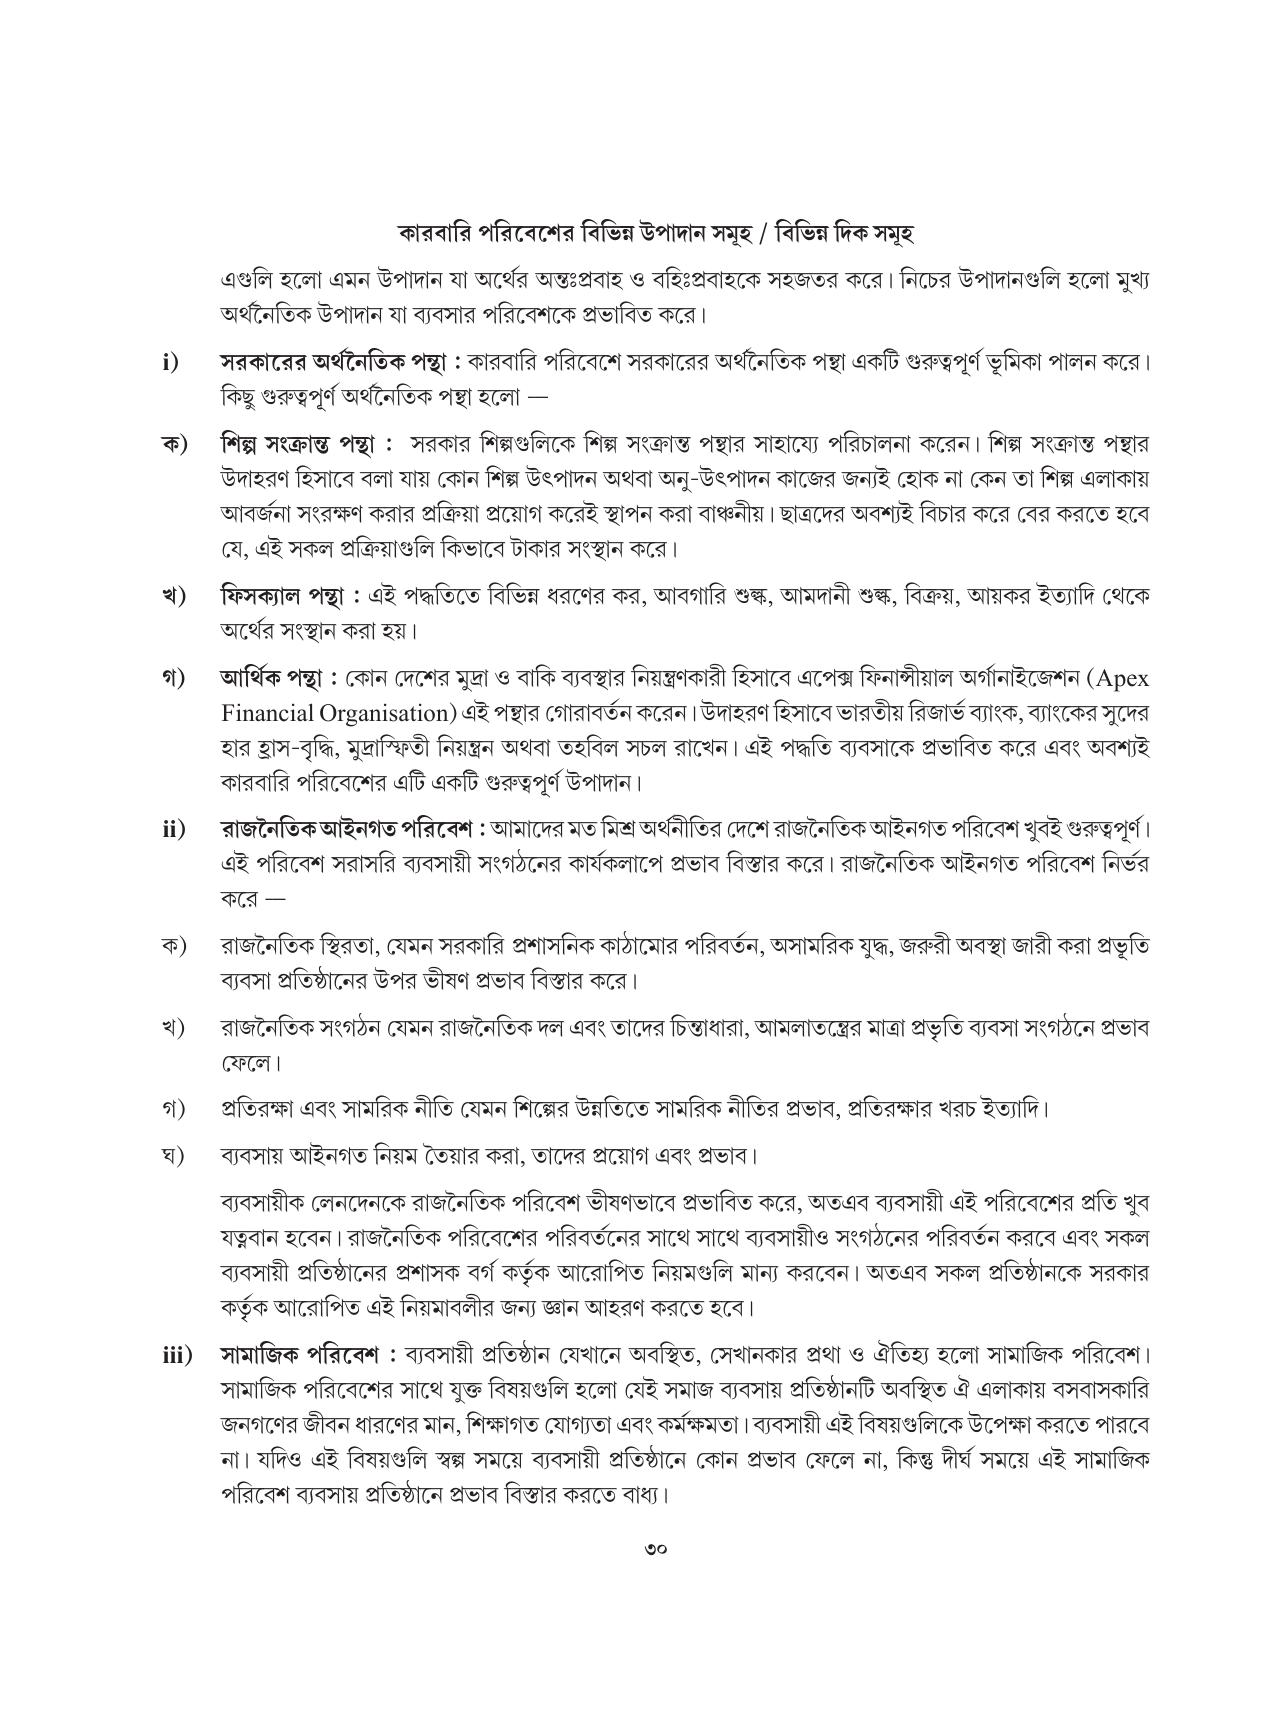 Tripura Board Class 12 Karbari Shastra Bengali Version Workbooks - Page 30